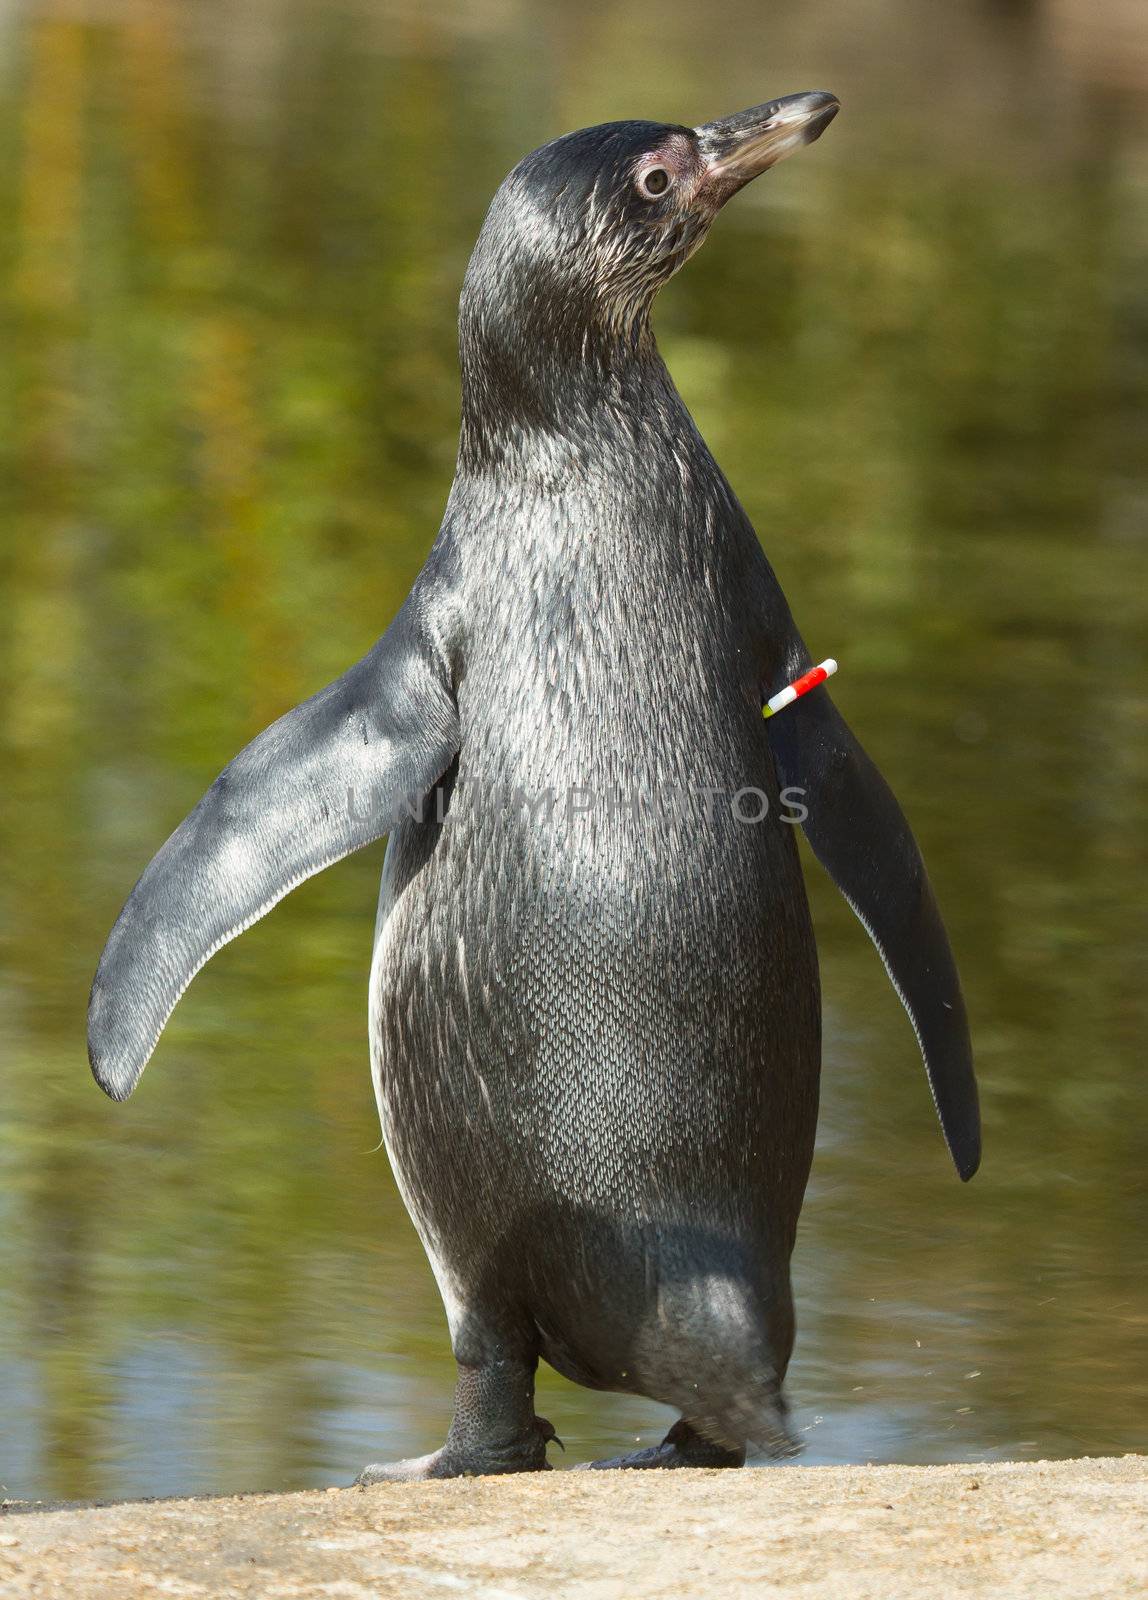 A Humboldt penguin by michaklootwijk